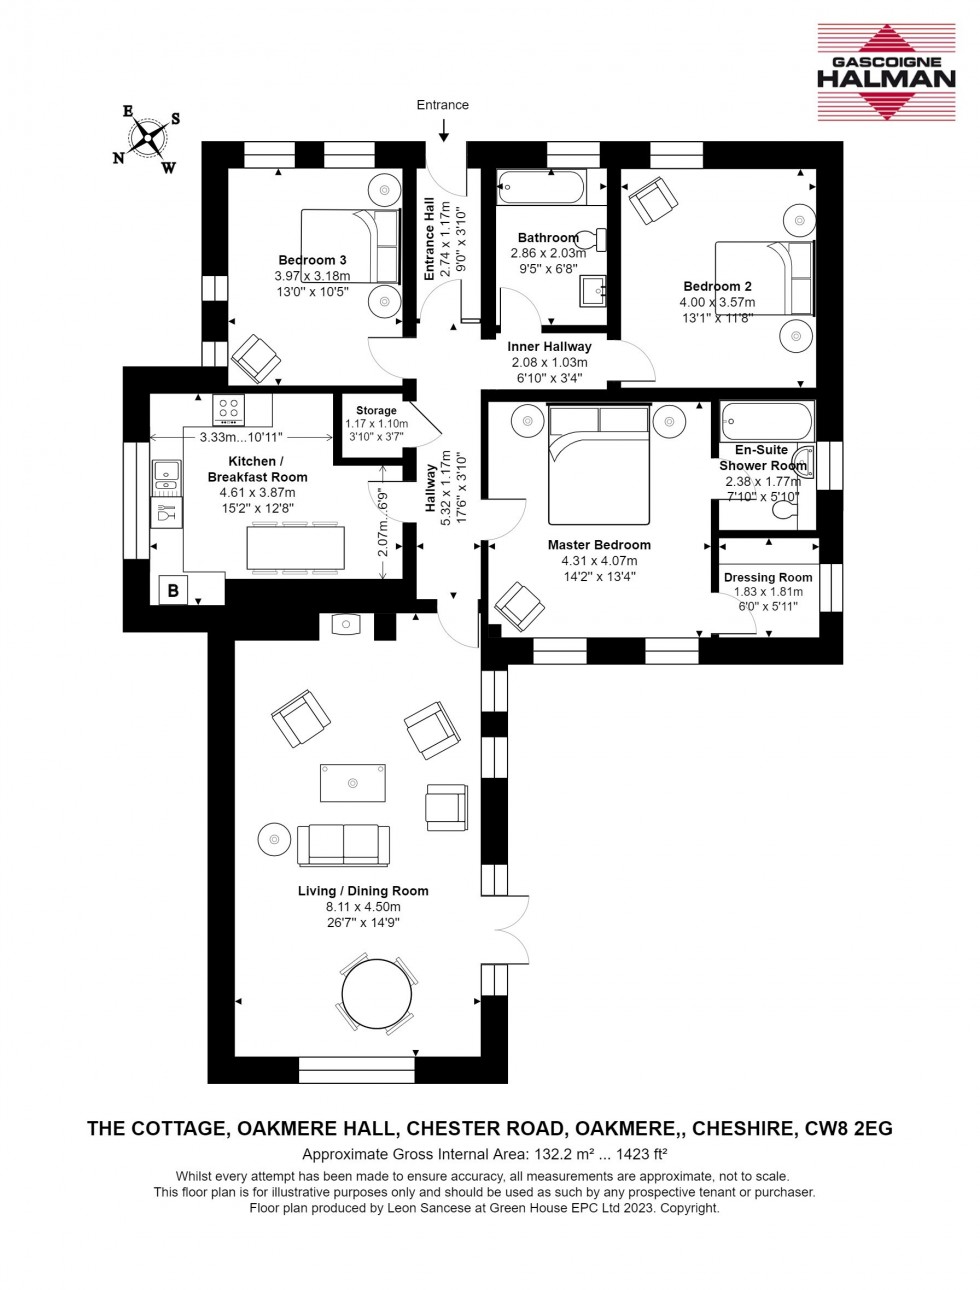 Floorplan for The Cottage at Oakmere Hall